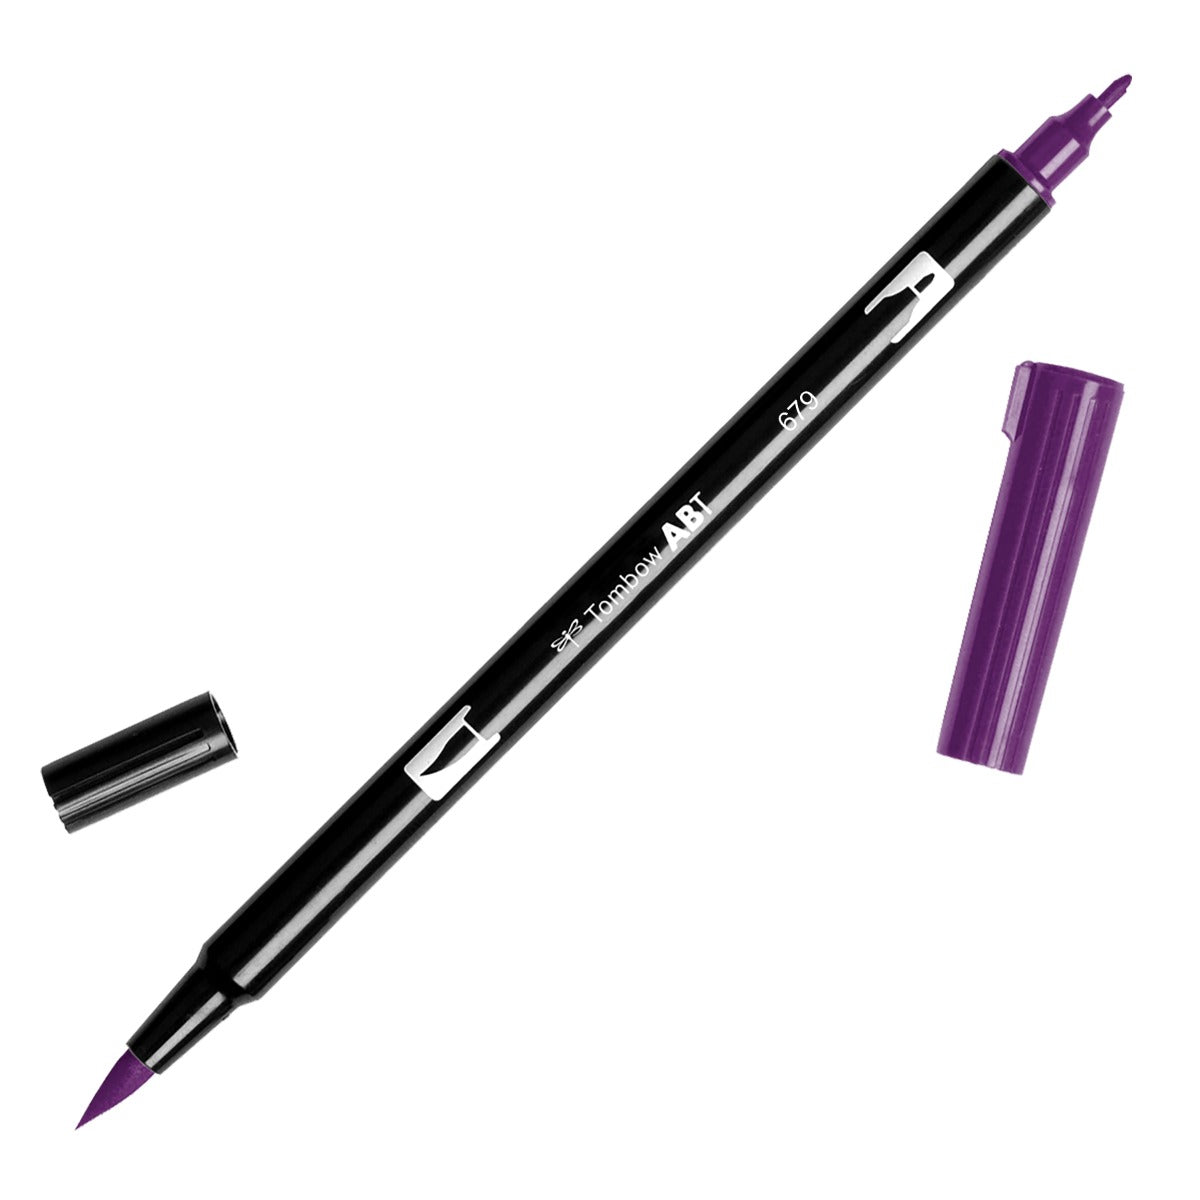 Tombow Dual Brush Pen 679 Dark Plum